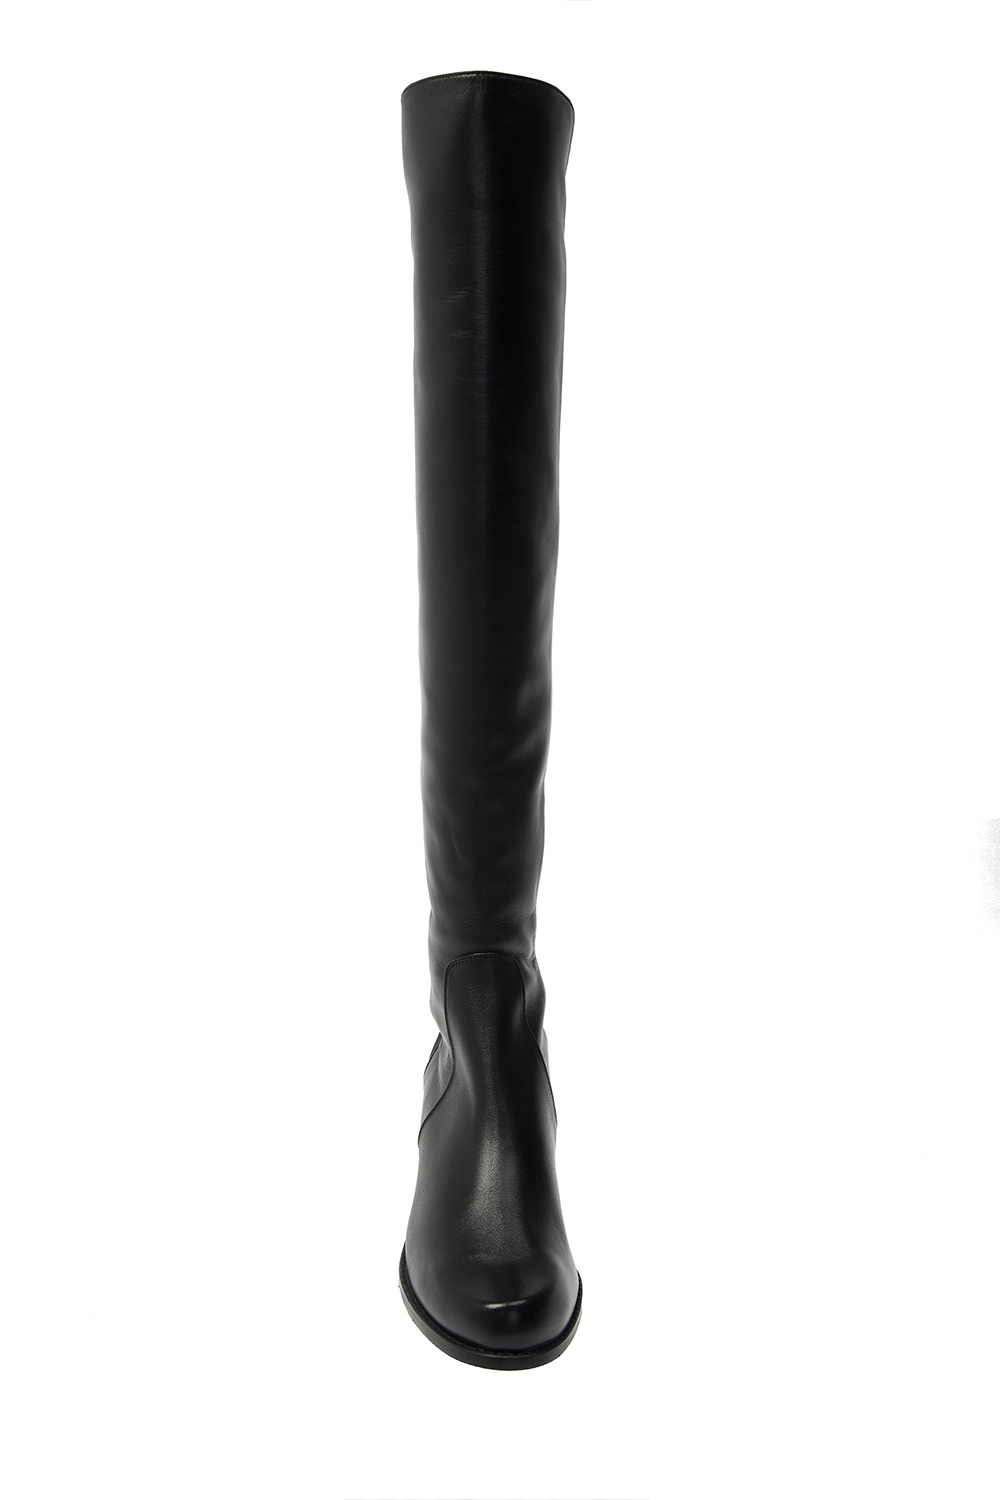 Stuart Weitzman ‘Reserve’ heeled boots